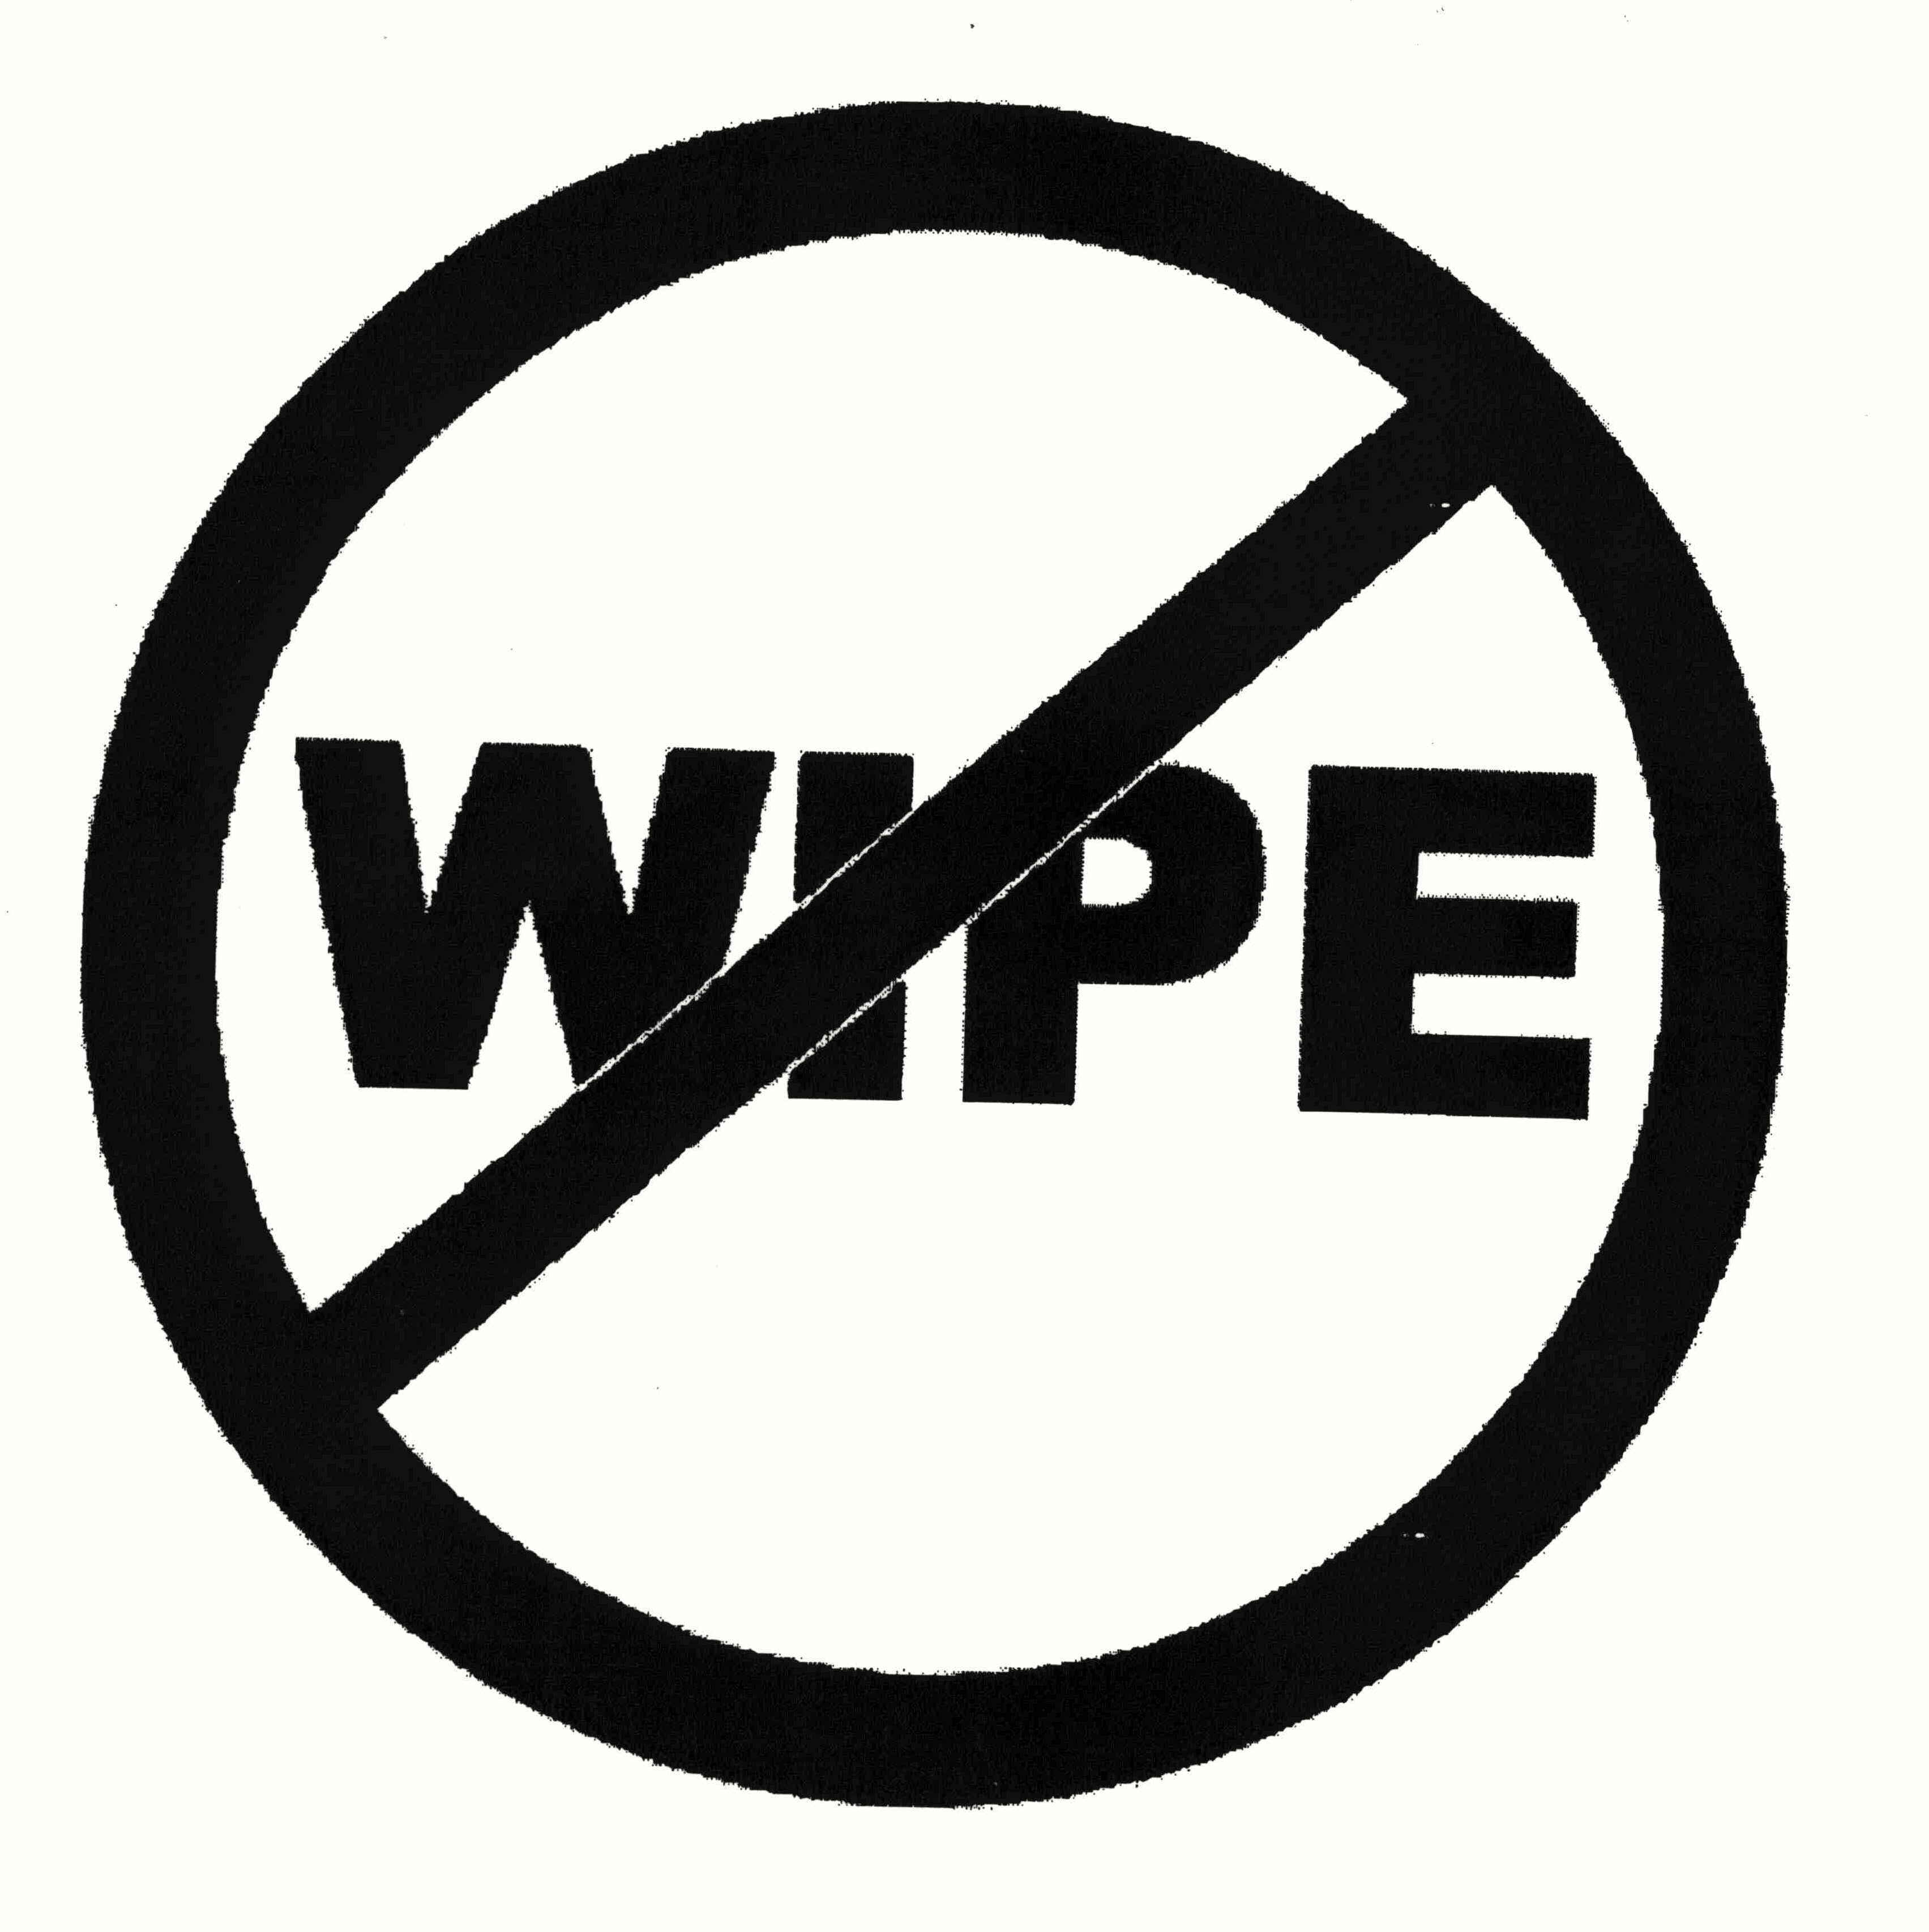 Trademark Logo WIPE